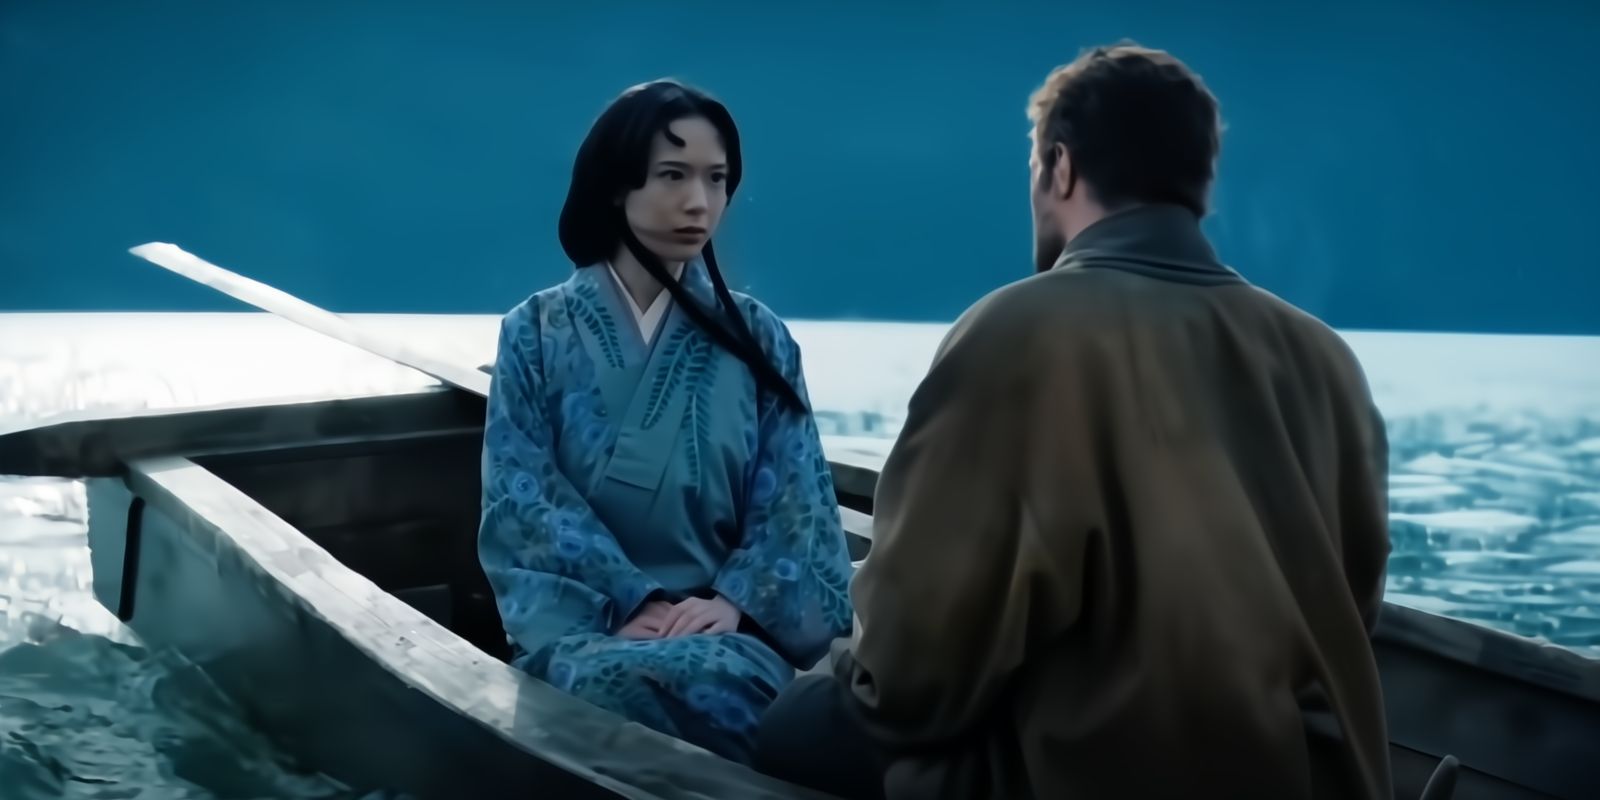 John Blackthorne and Fuji on a boat in Shogun episode 10